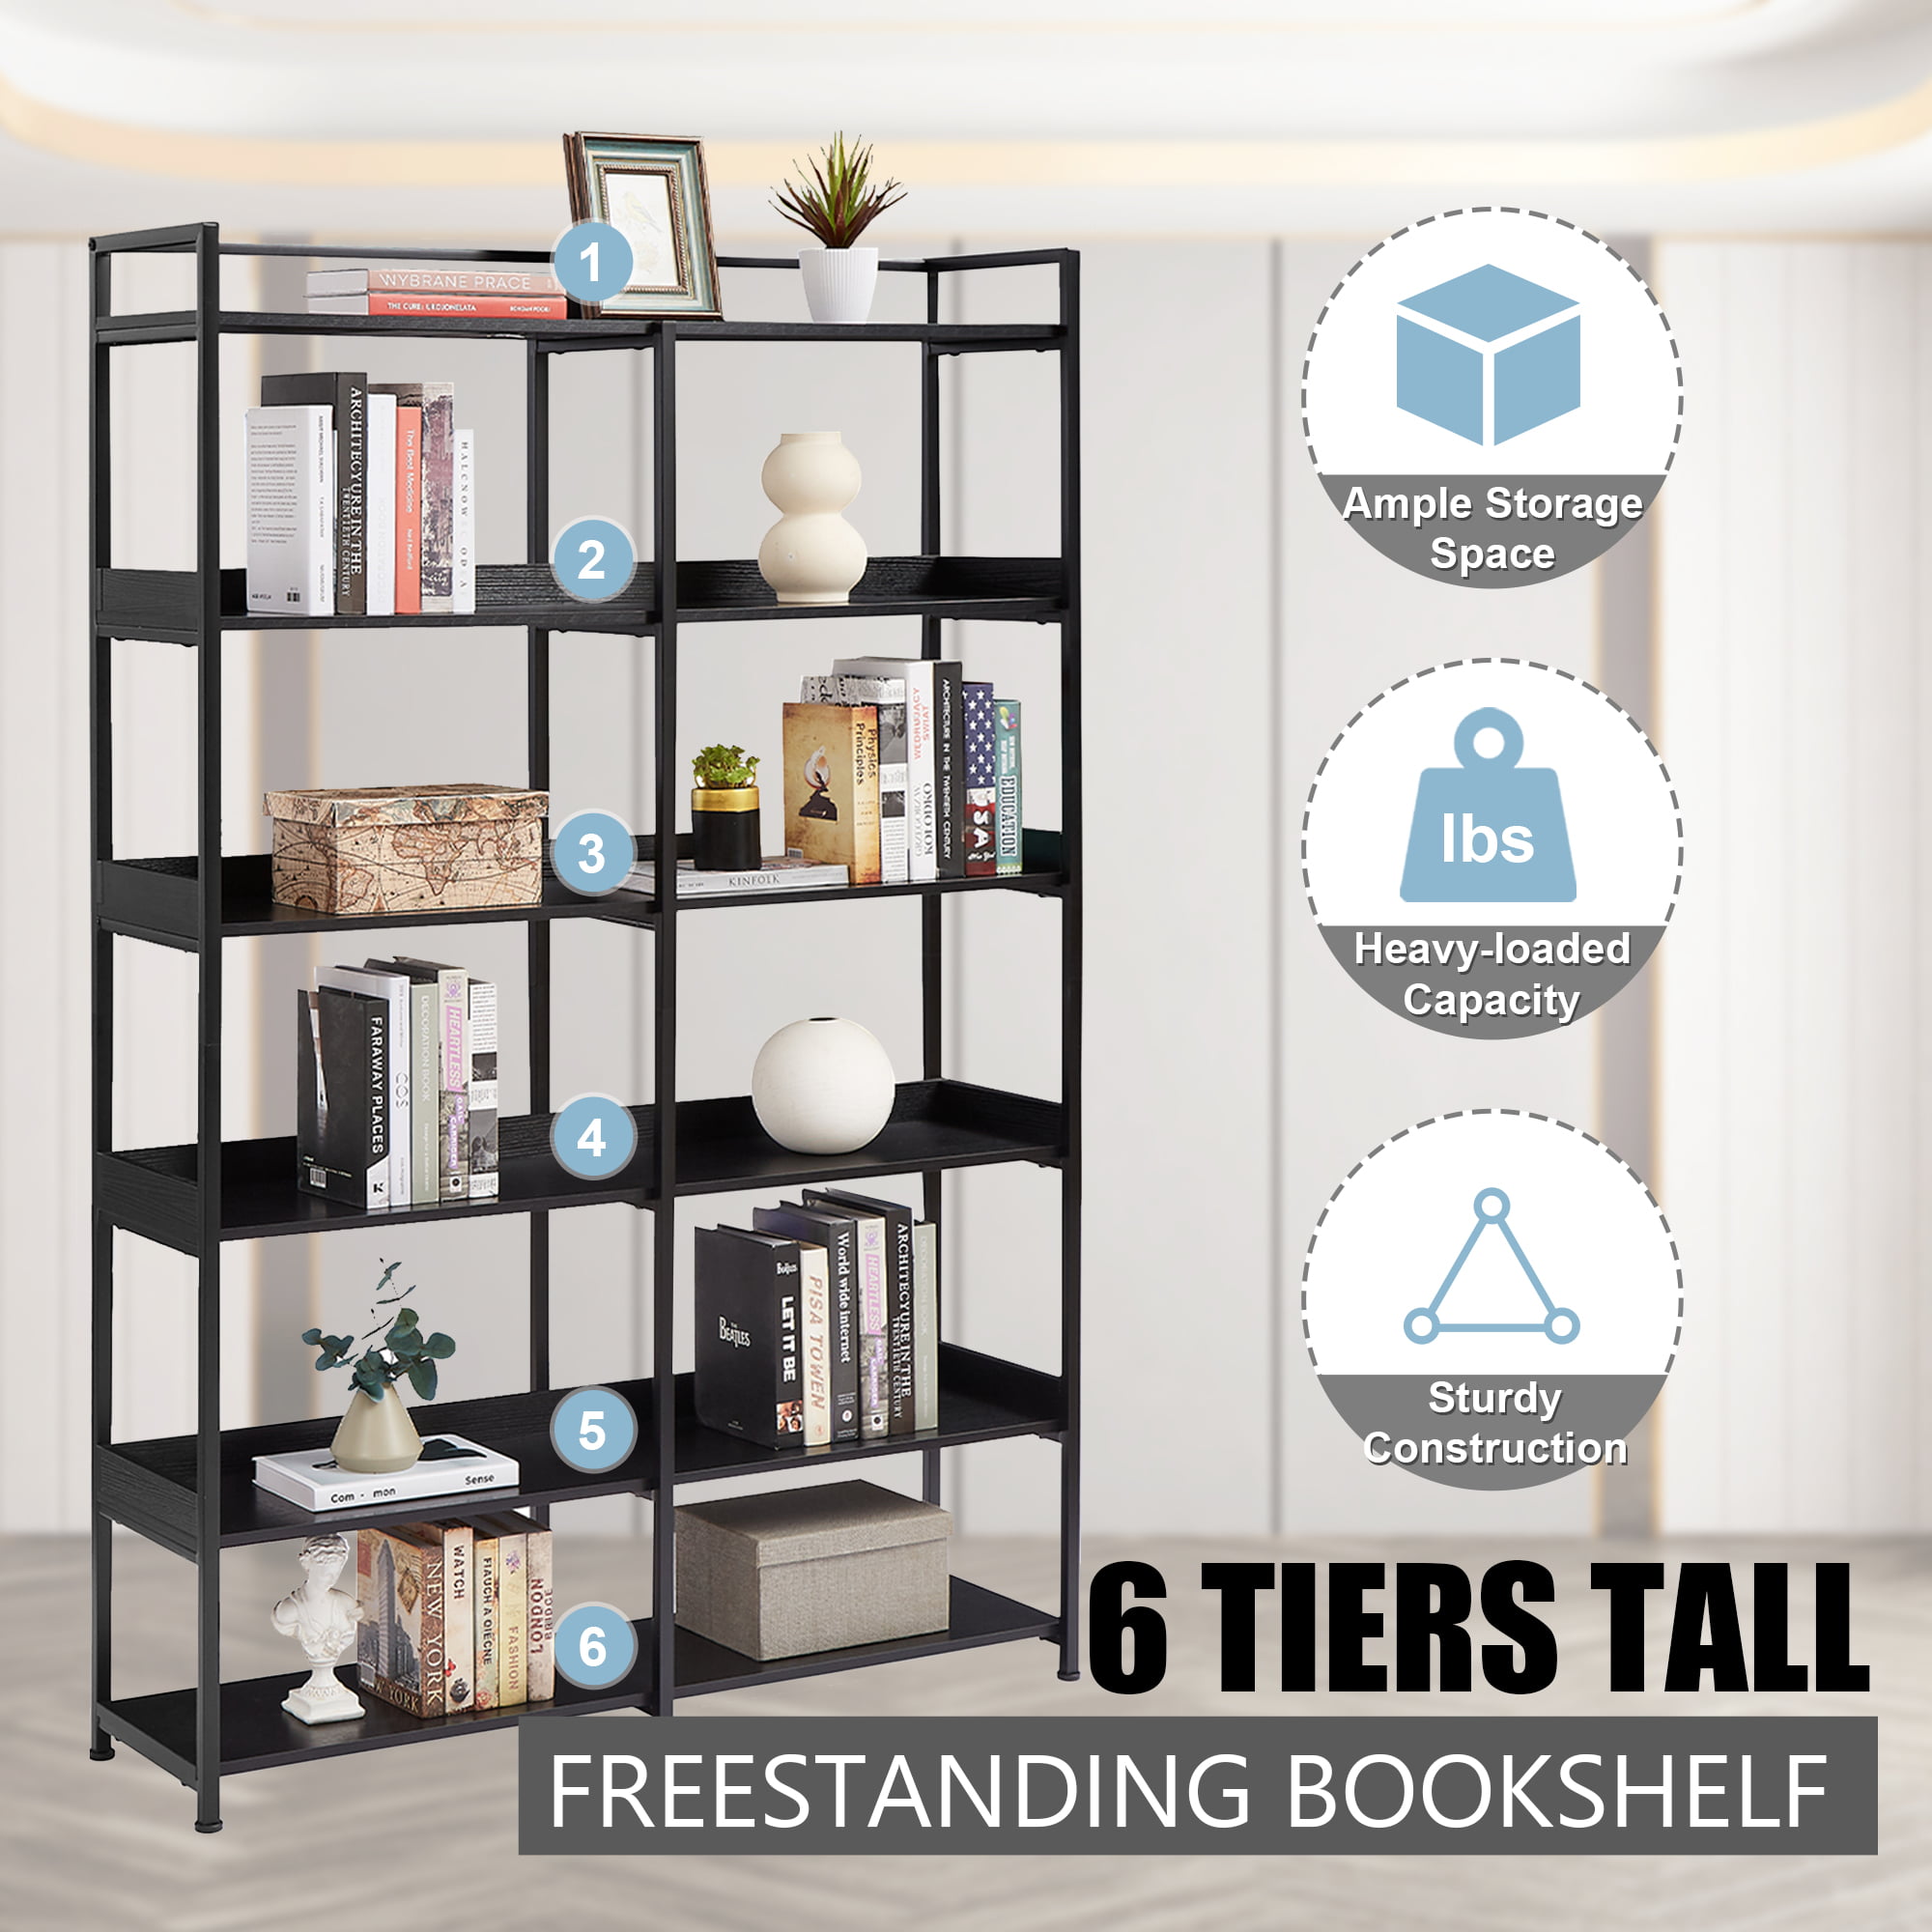 70.8 Inch Tall Bookshelf, MDF Boards - WF299104AAB